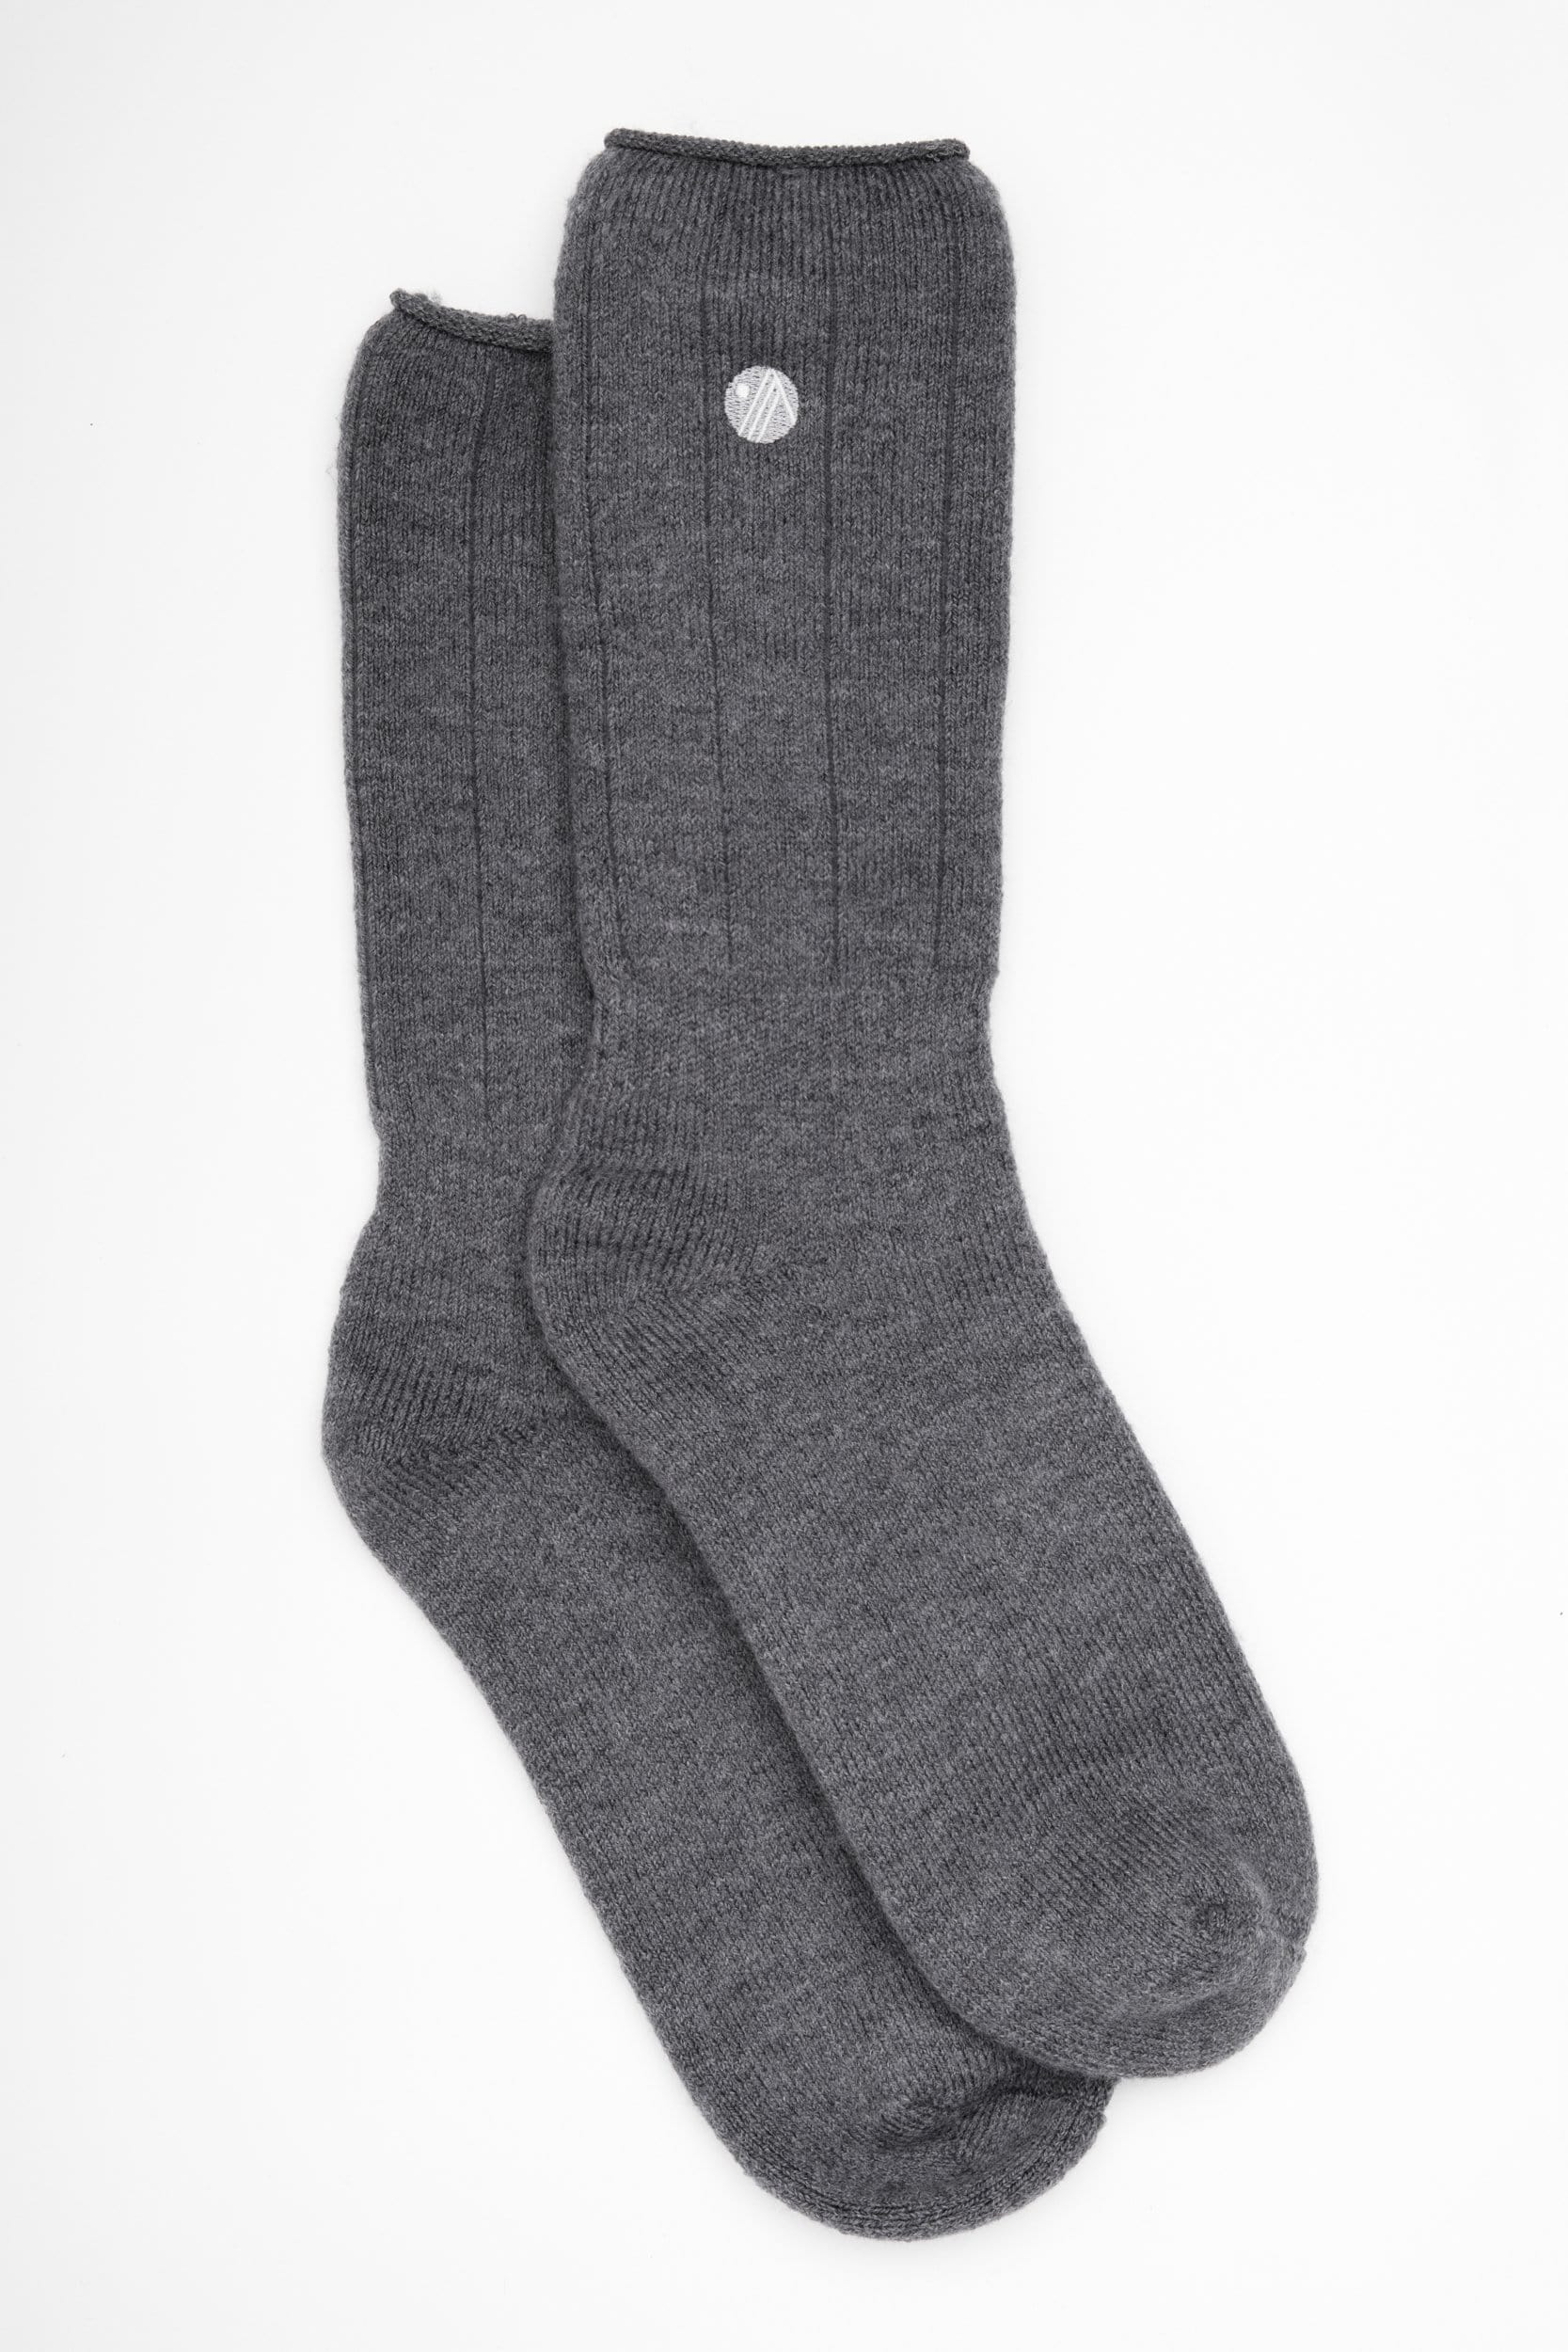 Merino Wool Hiking Socks - Charcoal - One Size - Womens - Acai Outdoorwear